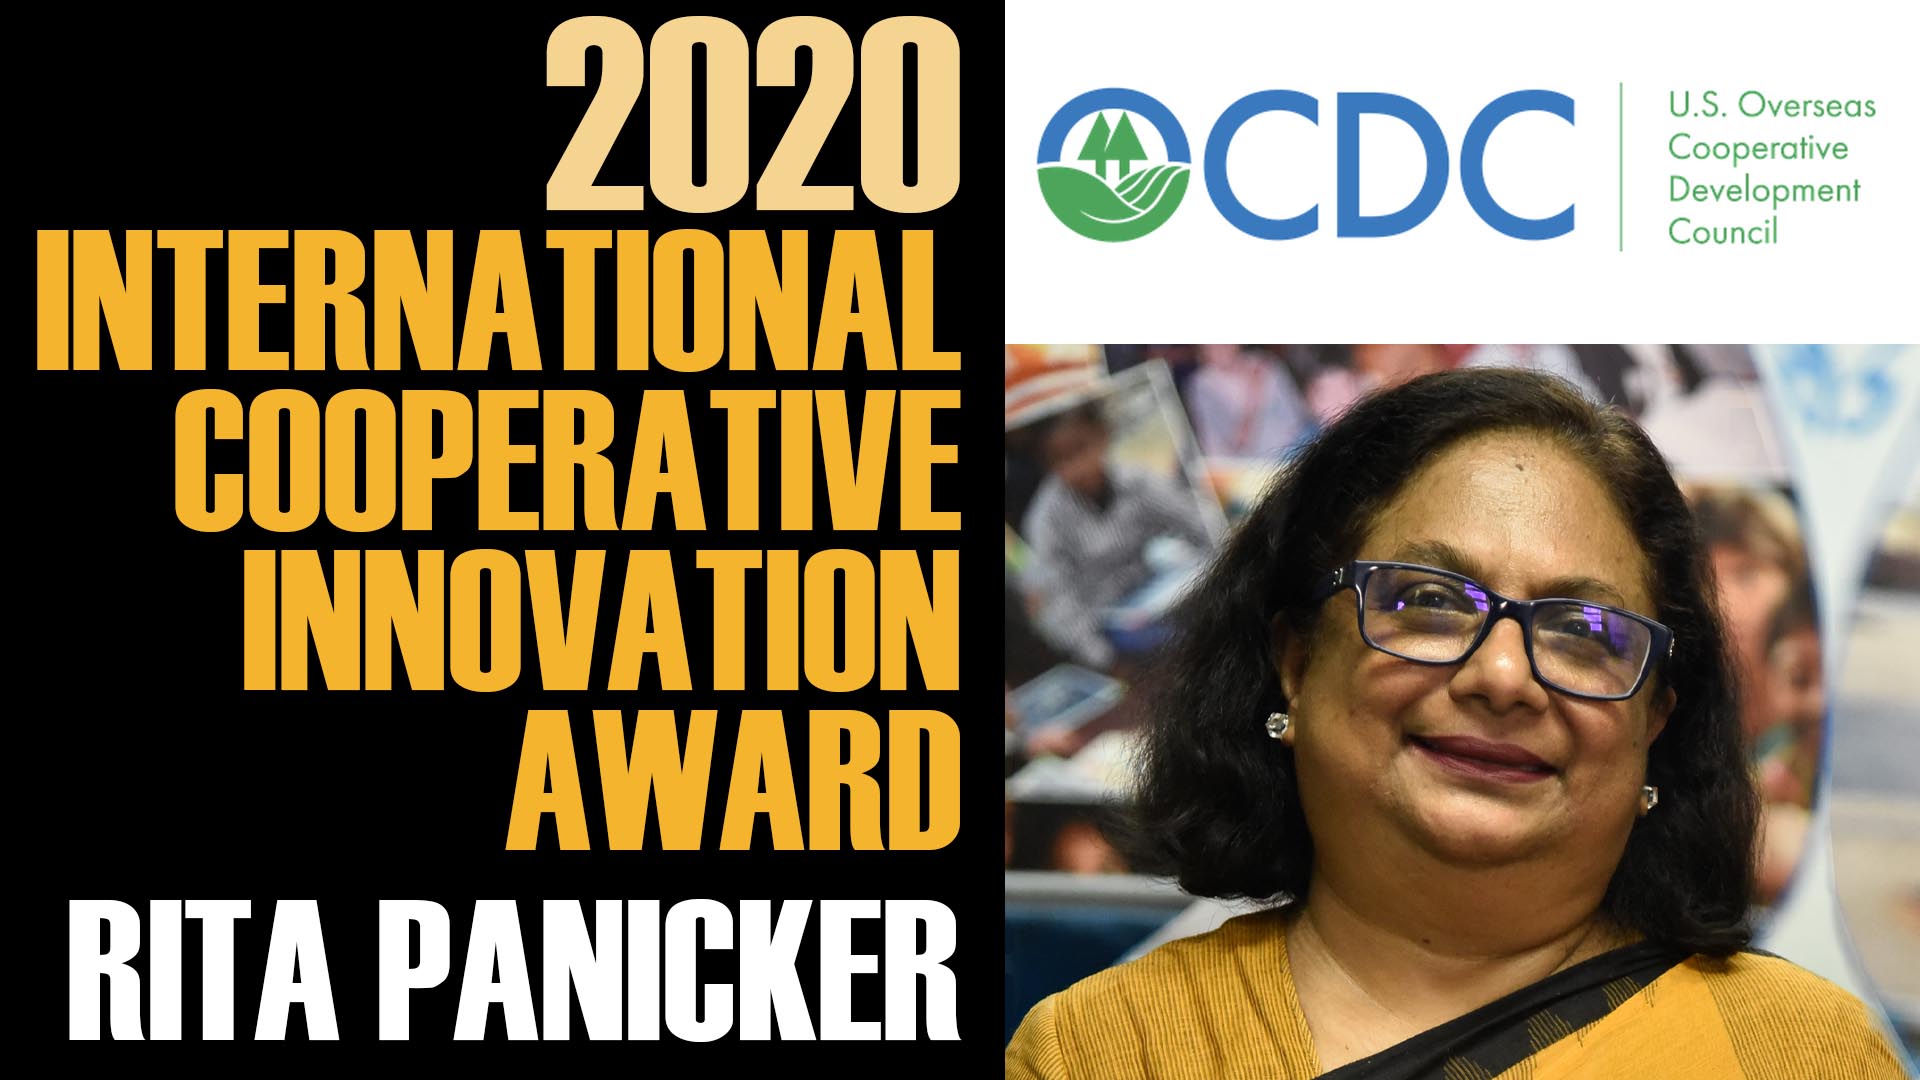 Rita Panicker Wins Innovation Award